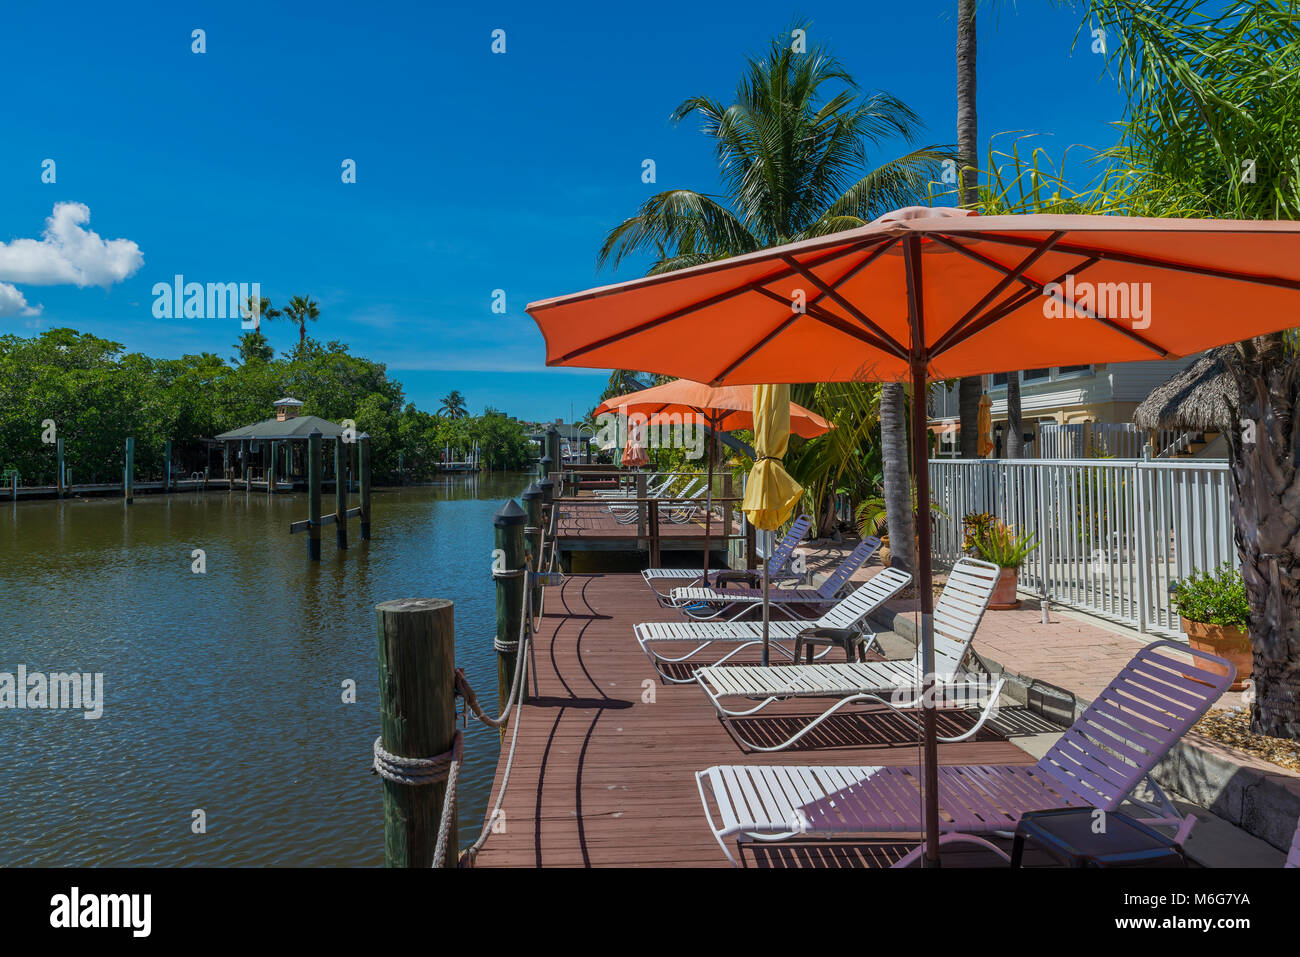 Ee.Uu., Florida Fort Myers Beach, sol, solstol brygga, sombrilla, varmt, semestre, ledigt, hav, båtplatser sjö, sol, tumbona, puente, sombrilla, cálido, vaca Foto de stock